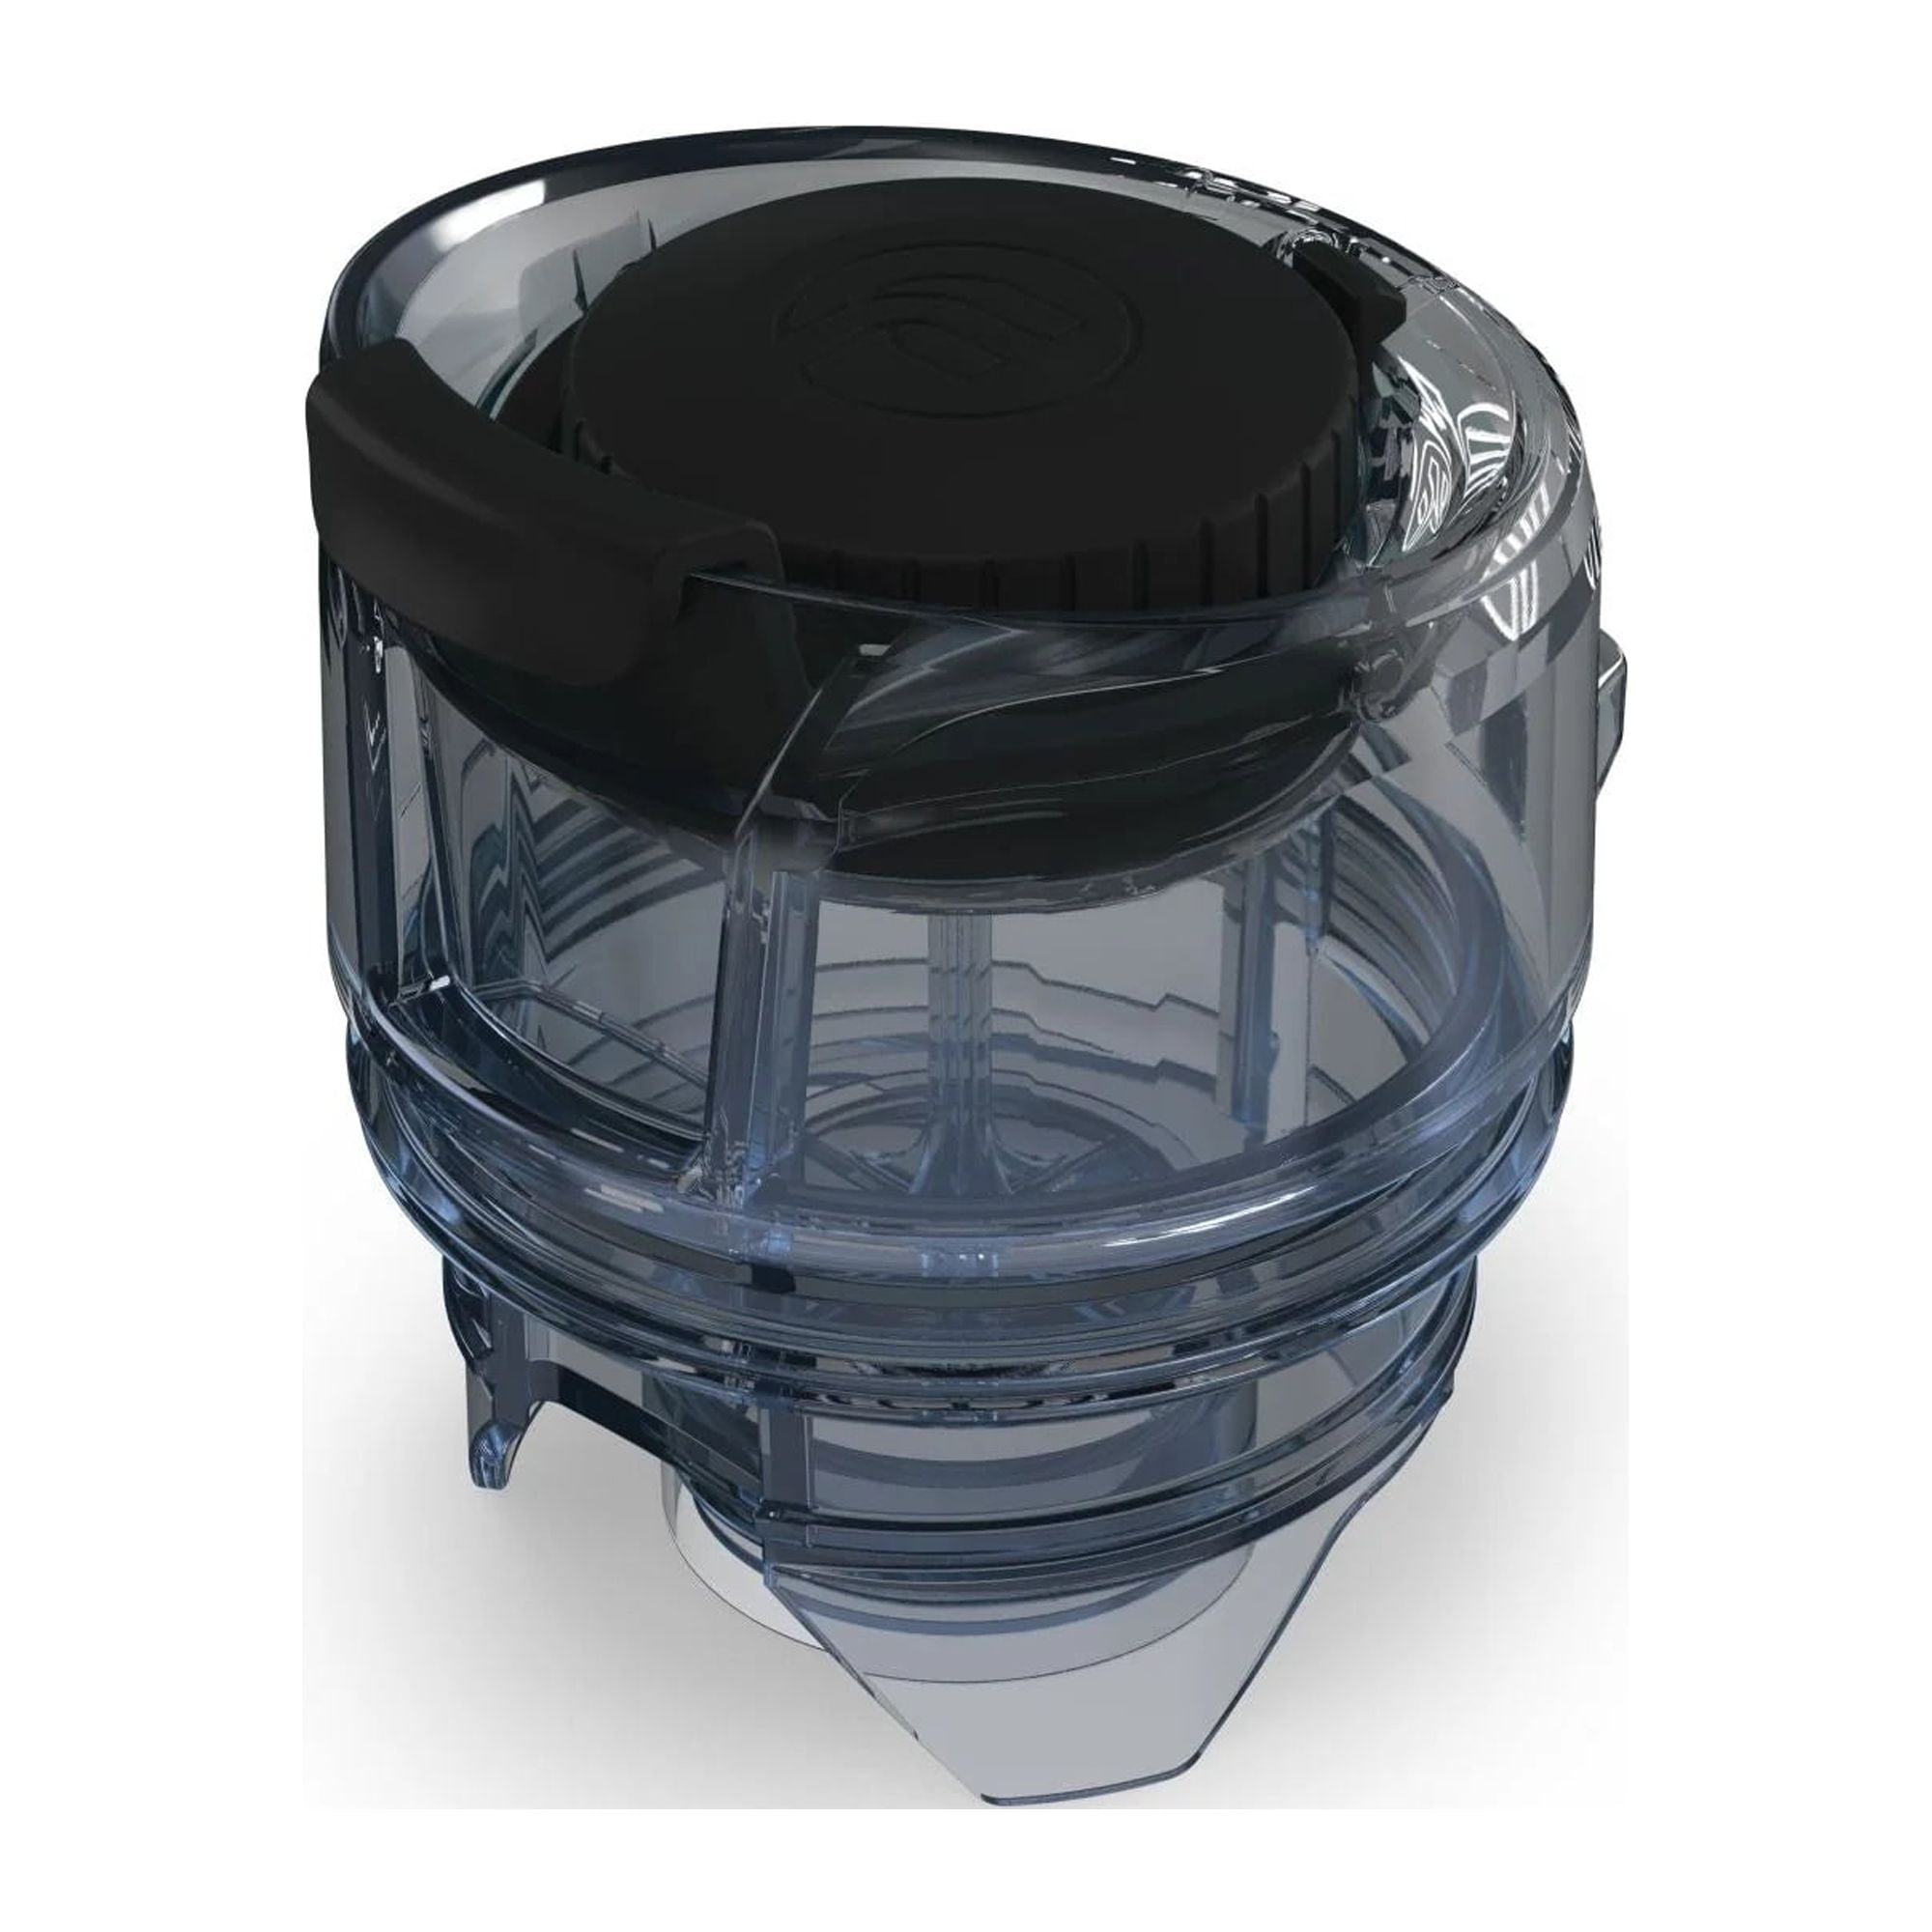  Flaskap Madic Drinking System, Insulated Tumbler with Shot  Dispenser, Cup Holder Friendly, Splash Resistant